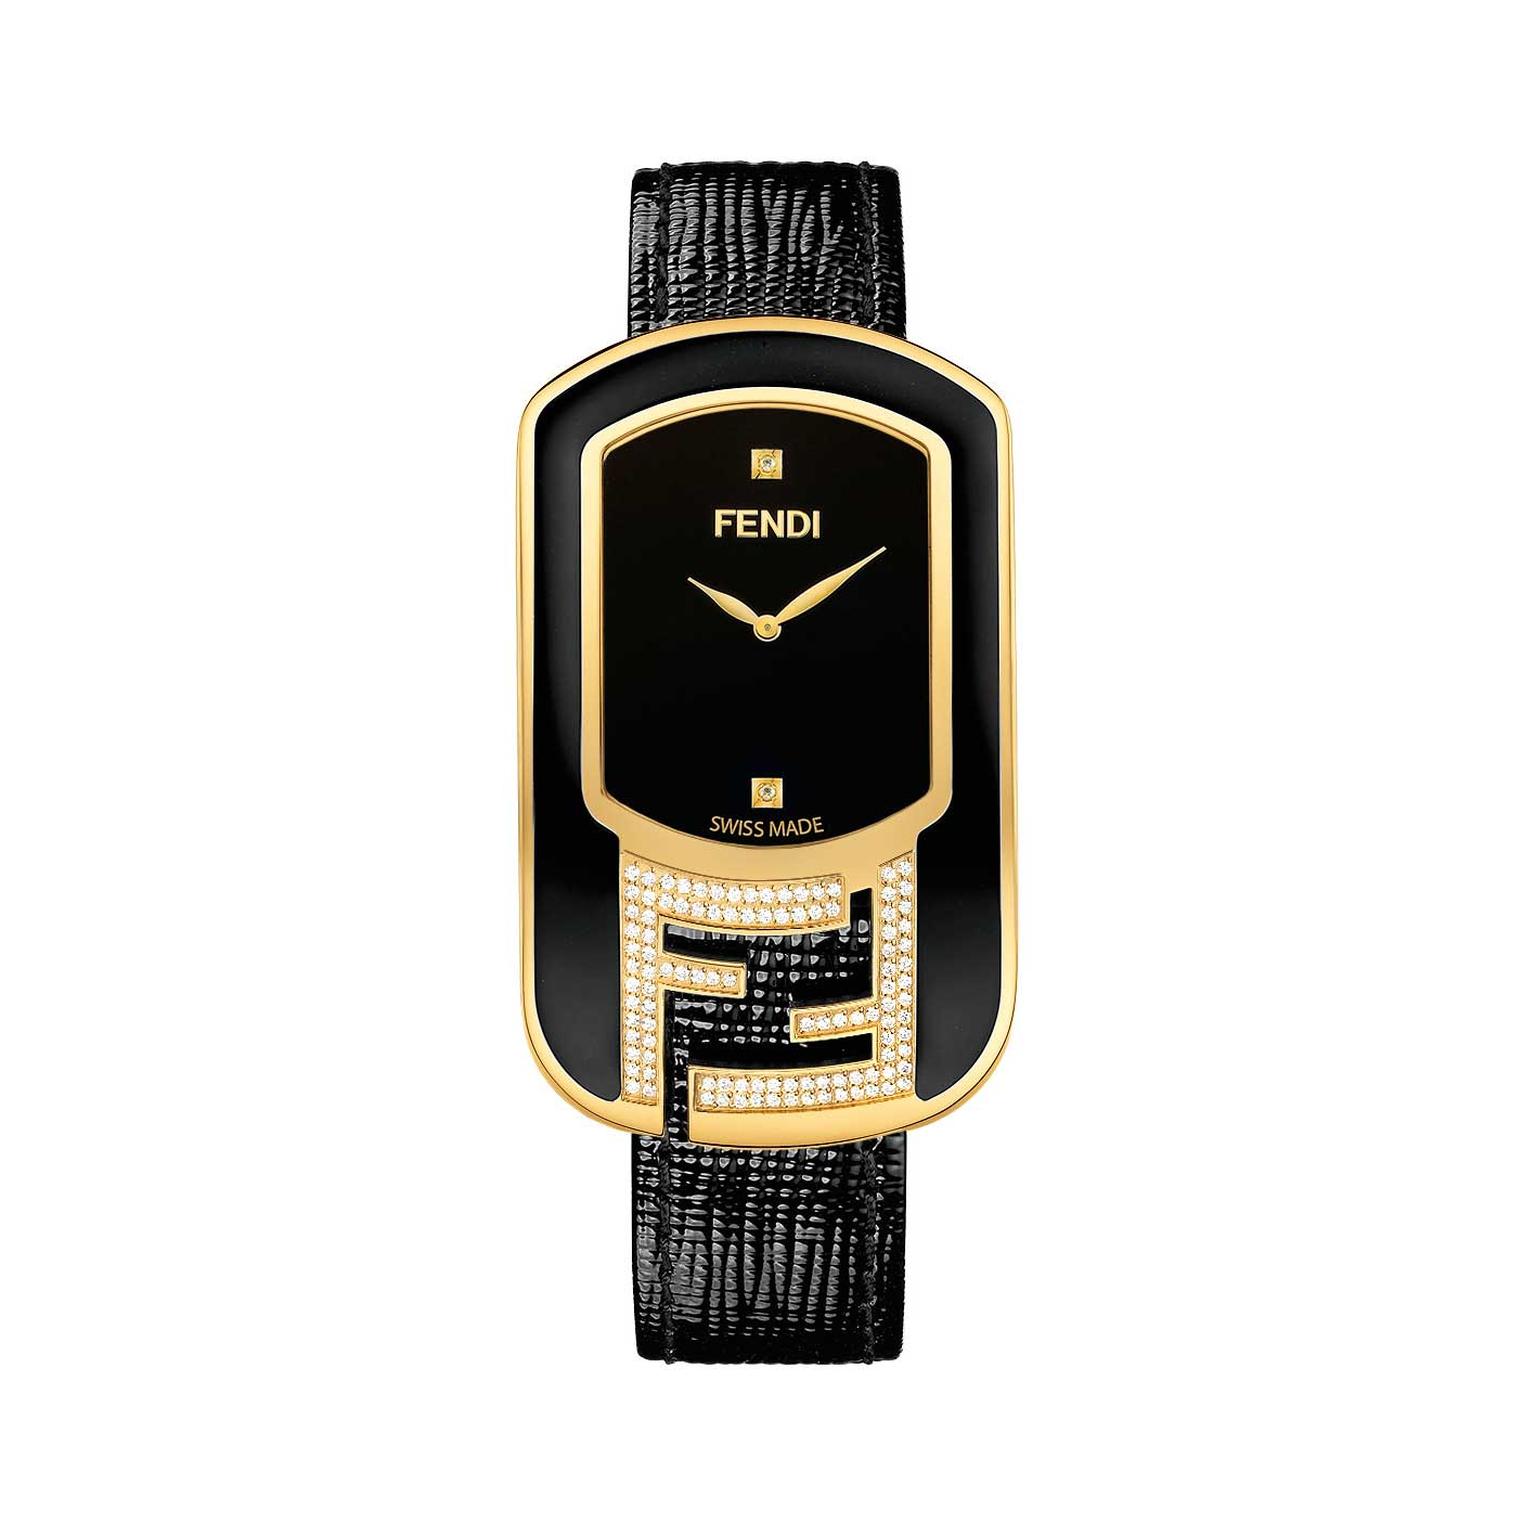 Fendi Chameleon diamond watch with black laquered dial